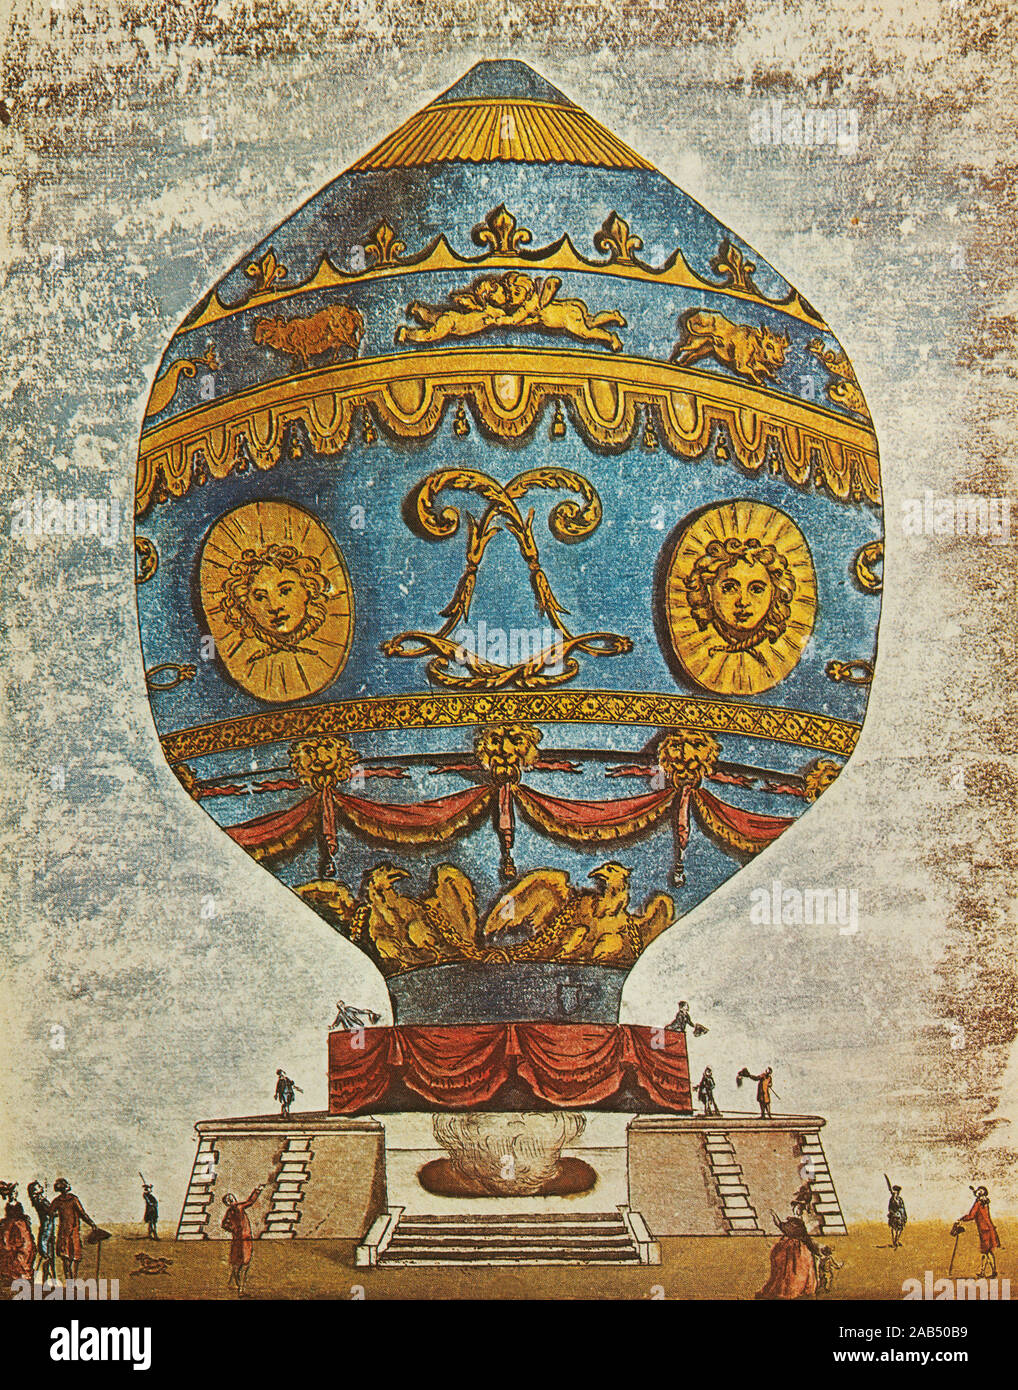 Gravur, das erste Experiment der Brüder Montgolfier Ballon 21. November 1783 in Frankreich Stockfoto